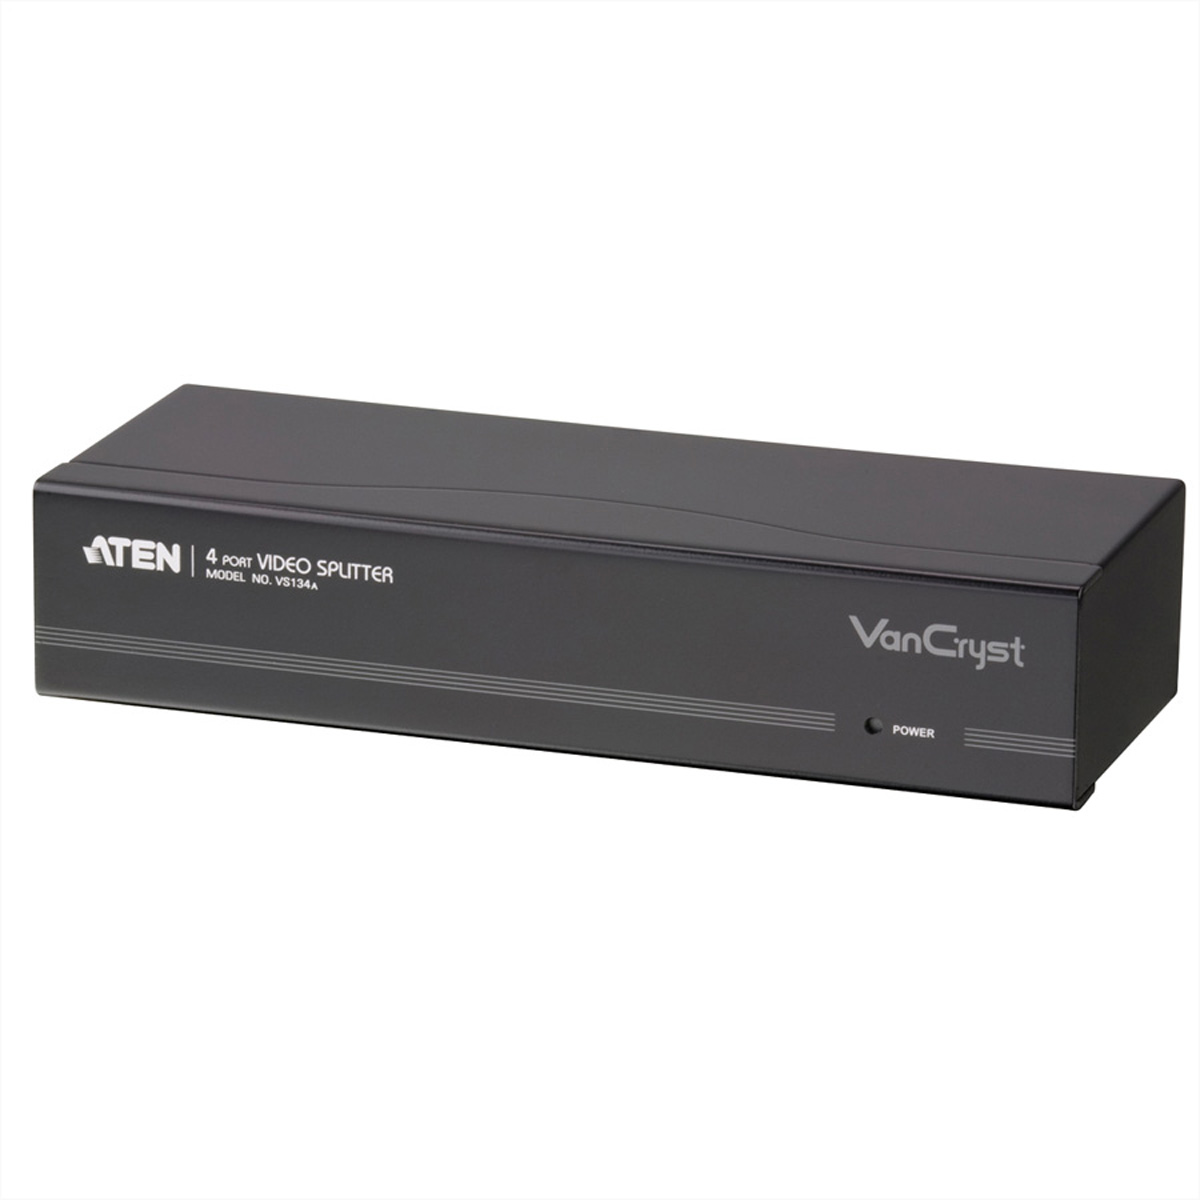 Video-Splitter, VGA-Video-Splitter VGA VS134A 450MHz, ATEN 4fach